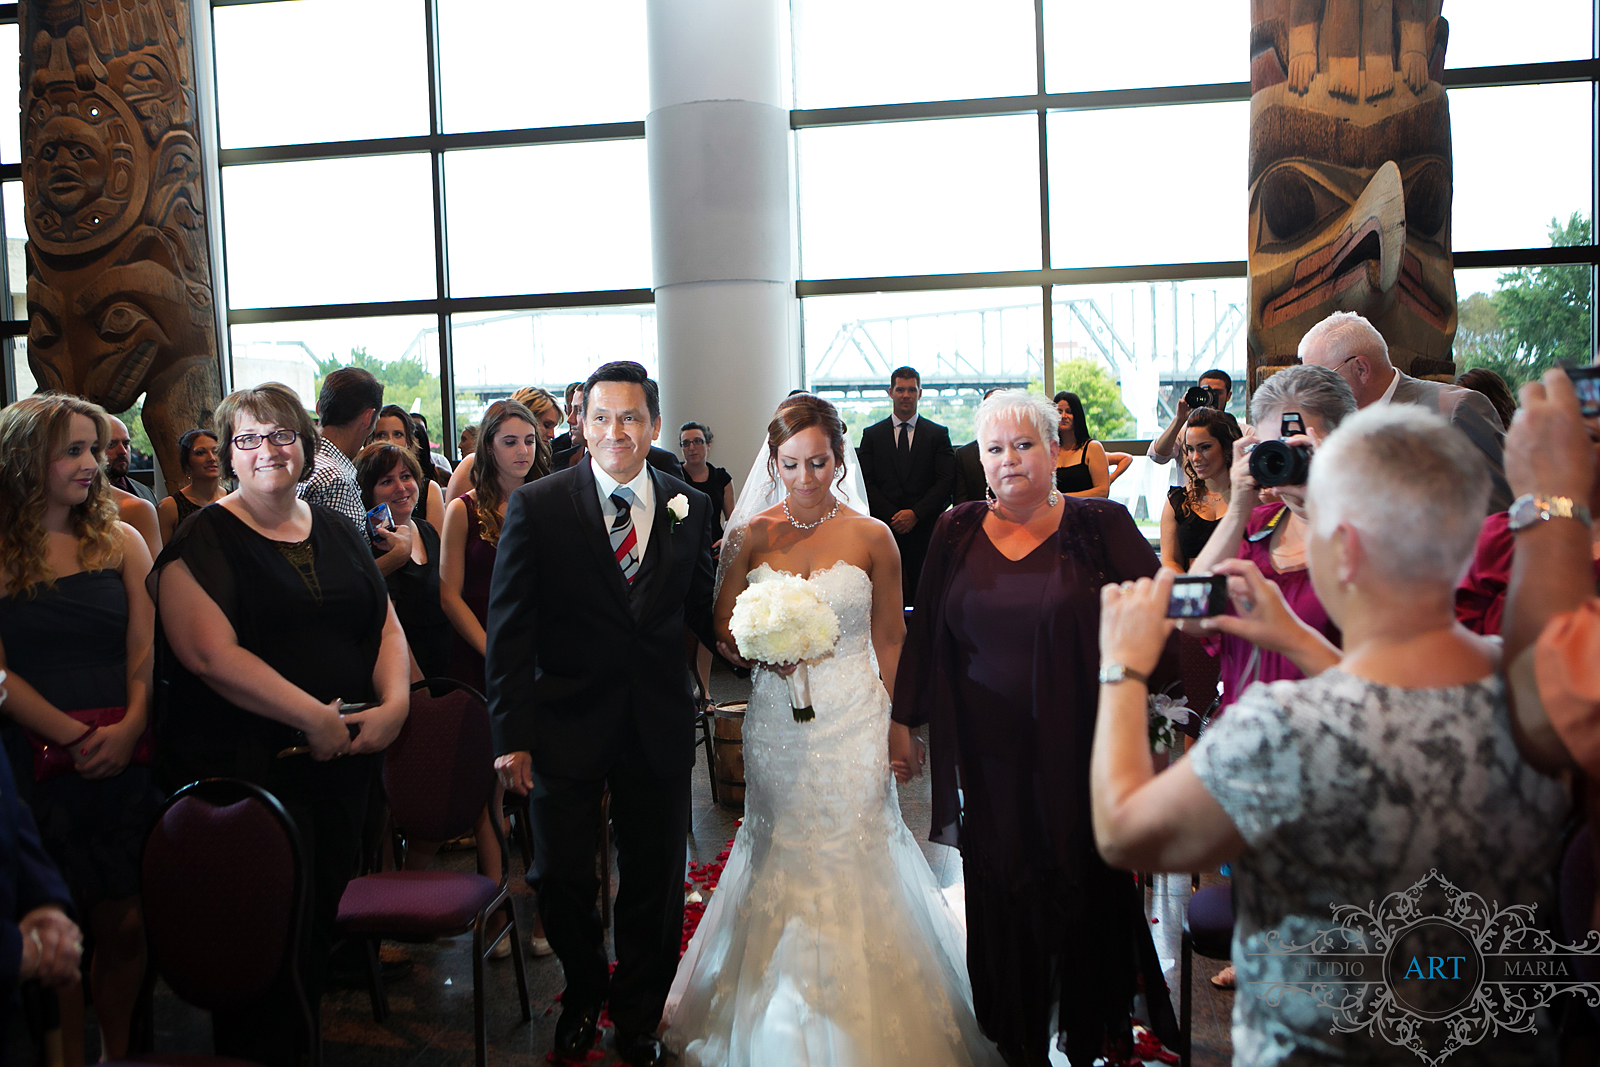 https://www.ottawaweddingmagazine.com/wp-content/uploads/2013/11/wedding-pictures-717.jpg